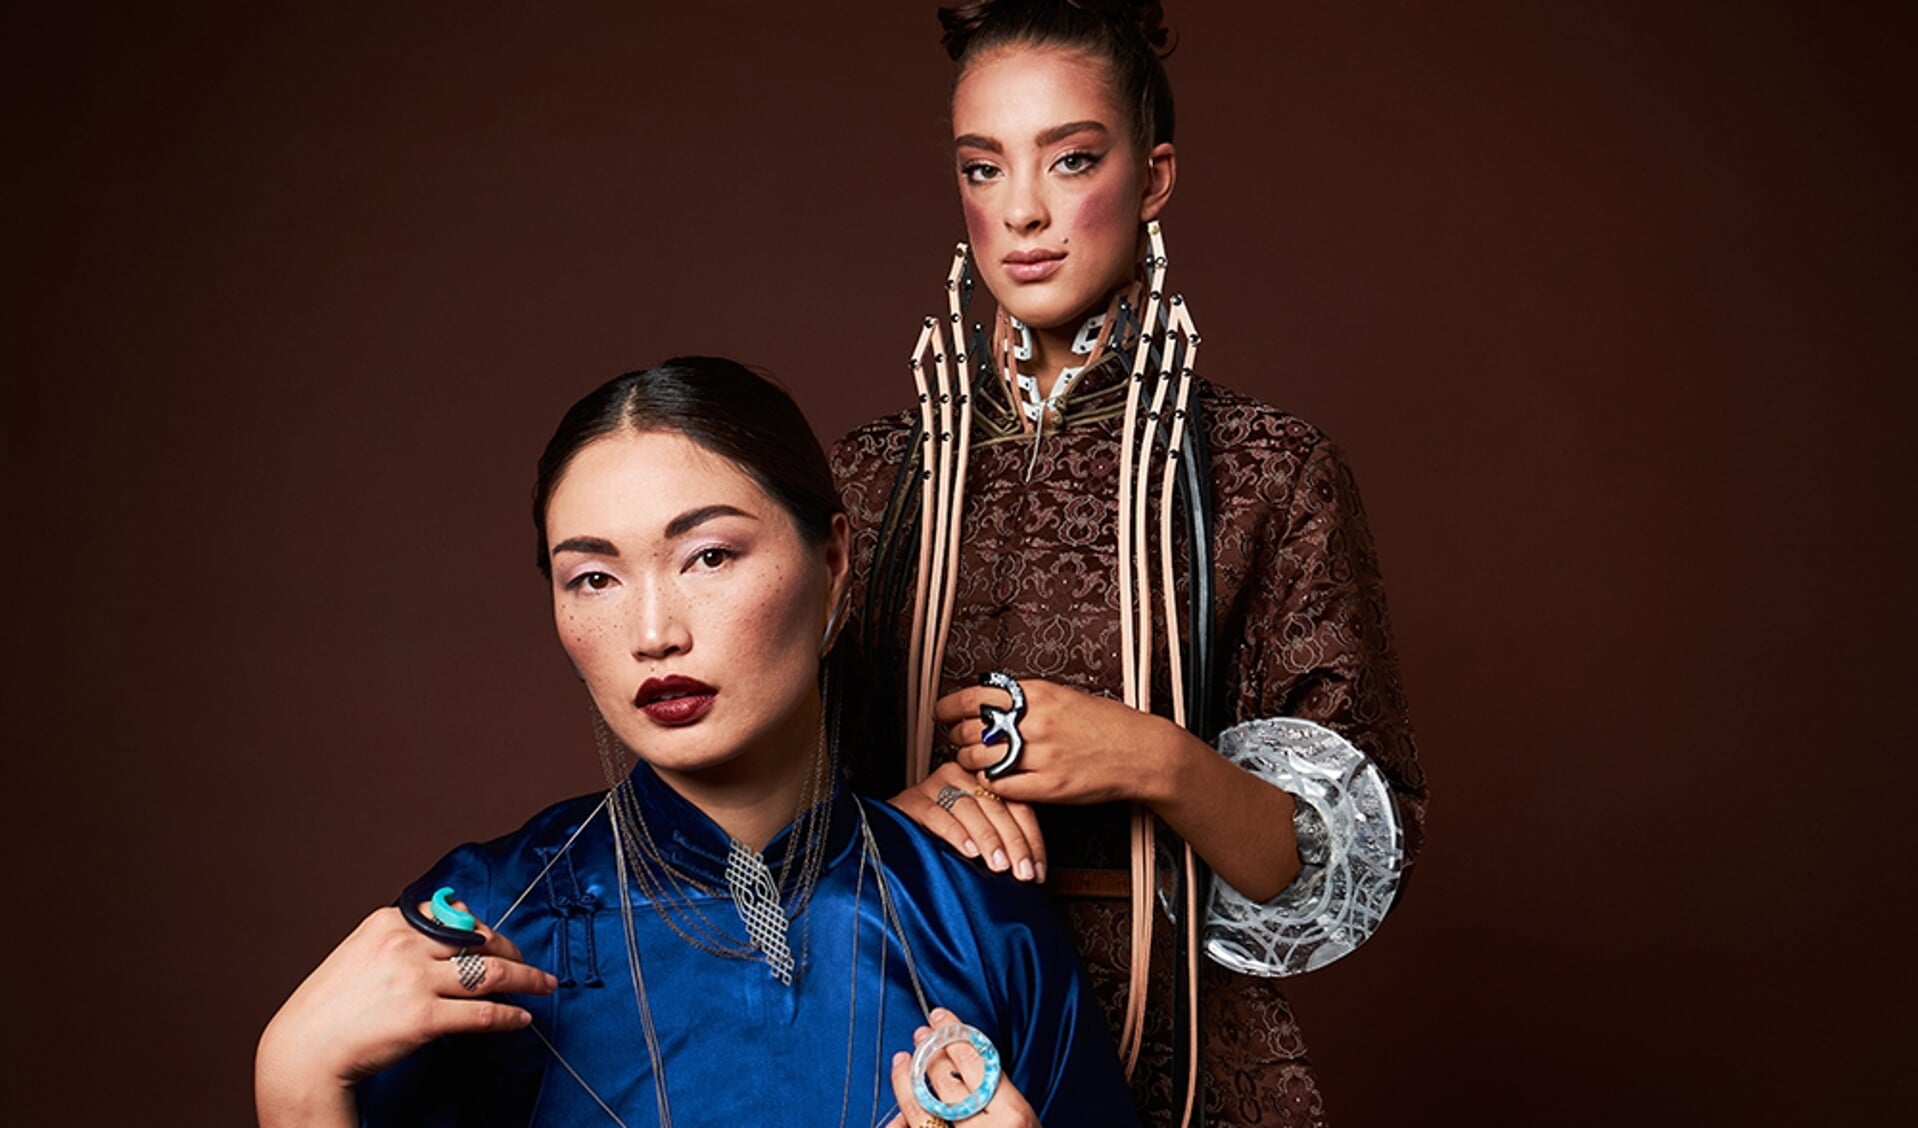 De dames tonen sieraden van Tegshtuya Gandugar (Mongolië). Foto: PR